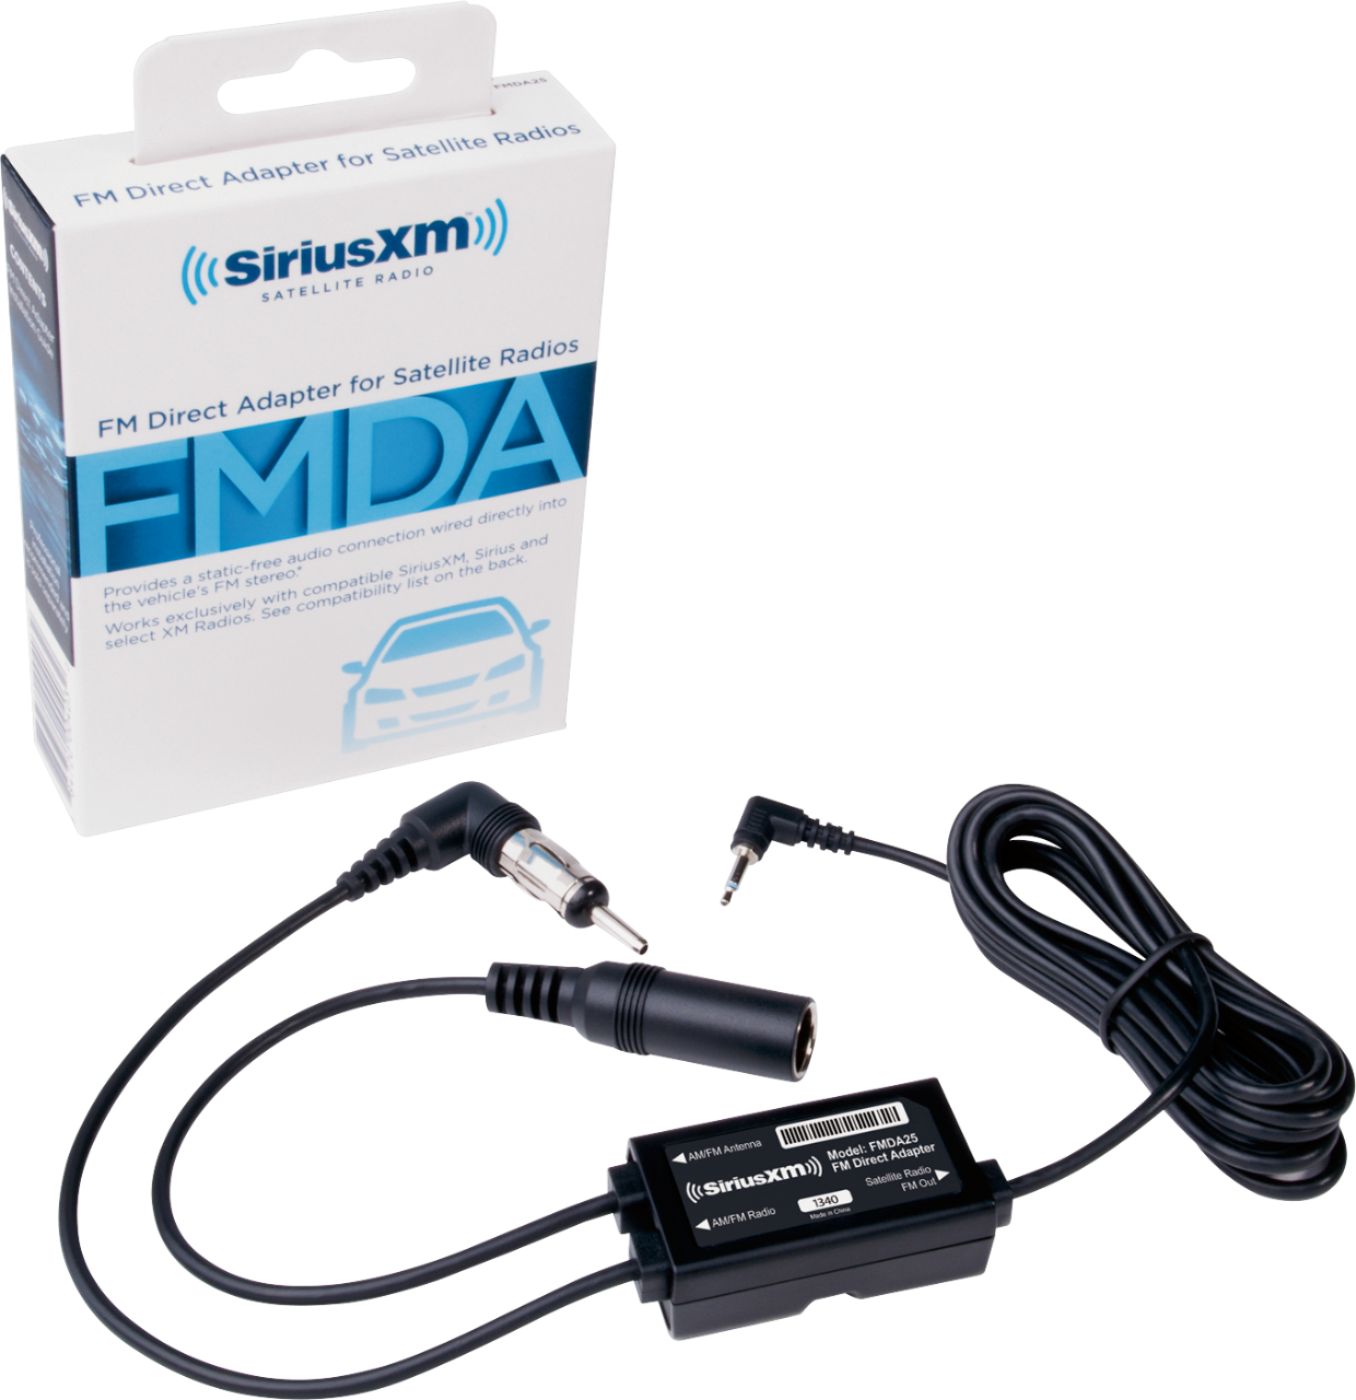 New SIRIUS-XM FMDA25 SiriusXM Wired FM Direct Adapter kit Fast Free Shipping 